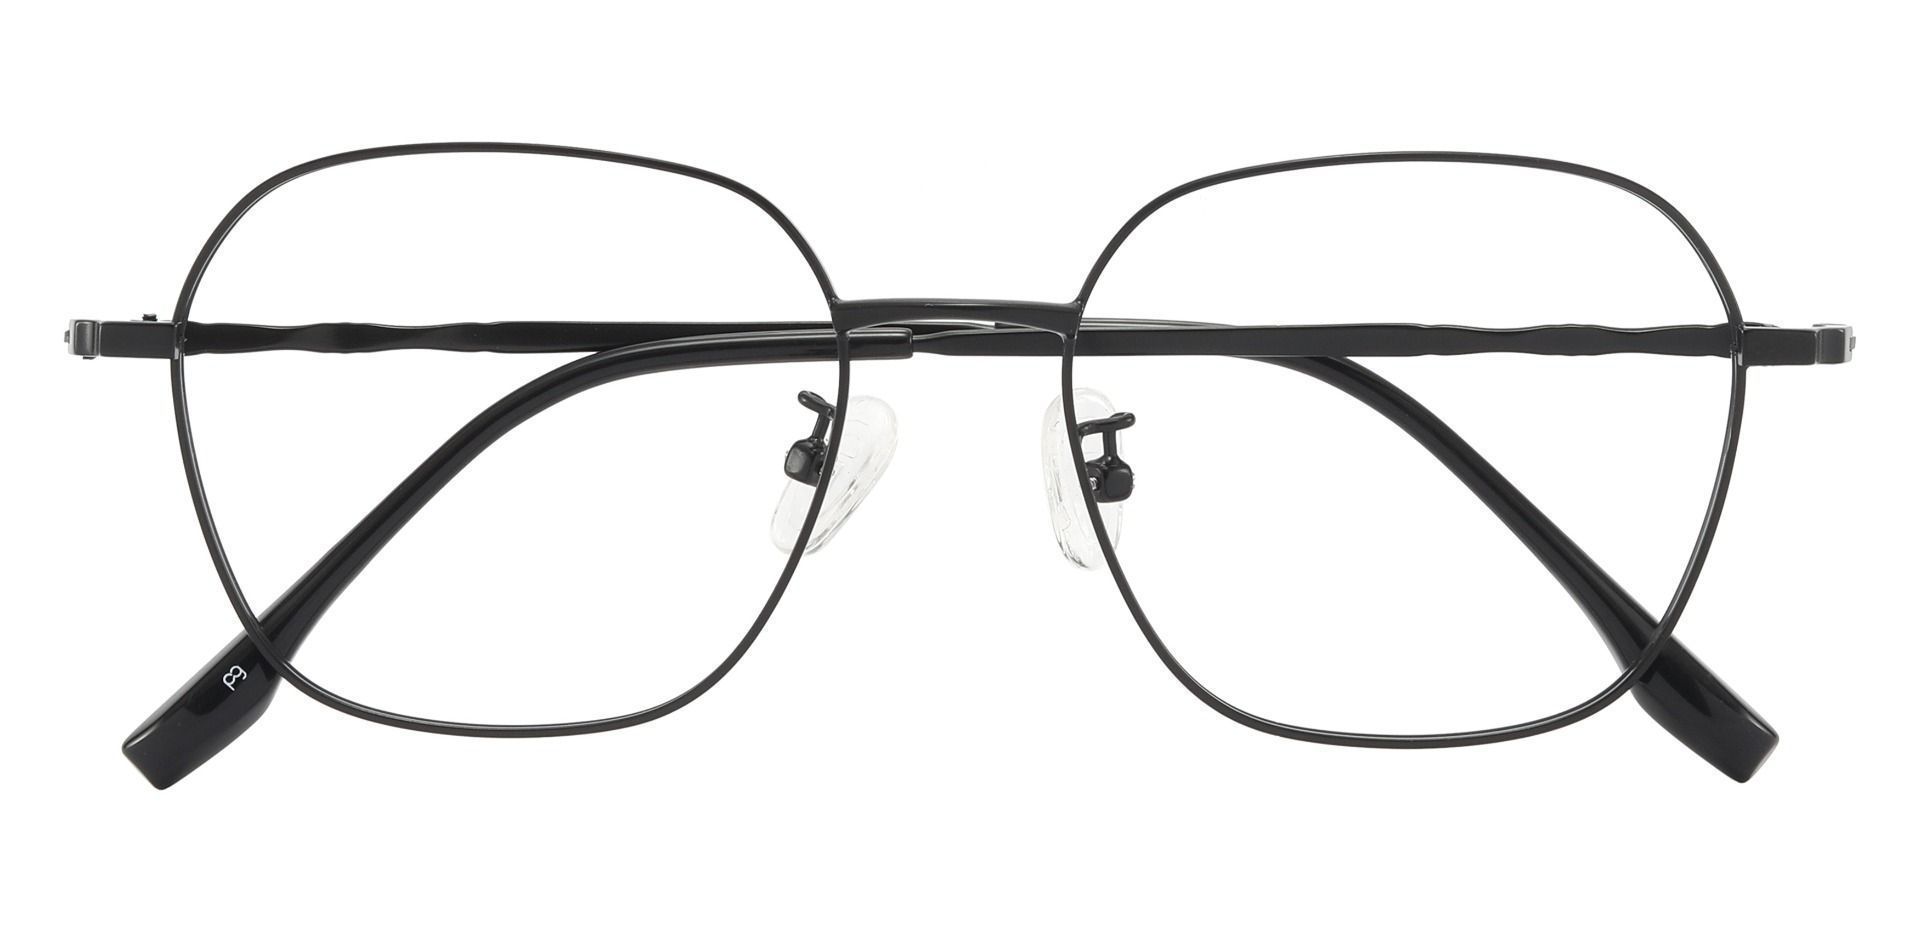 Crest Geometric Eyeglasses Frame - Black